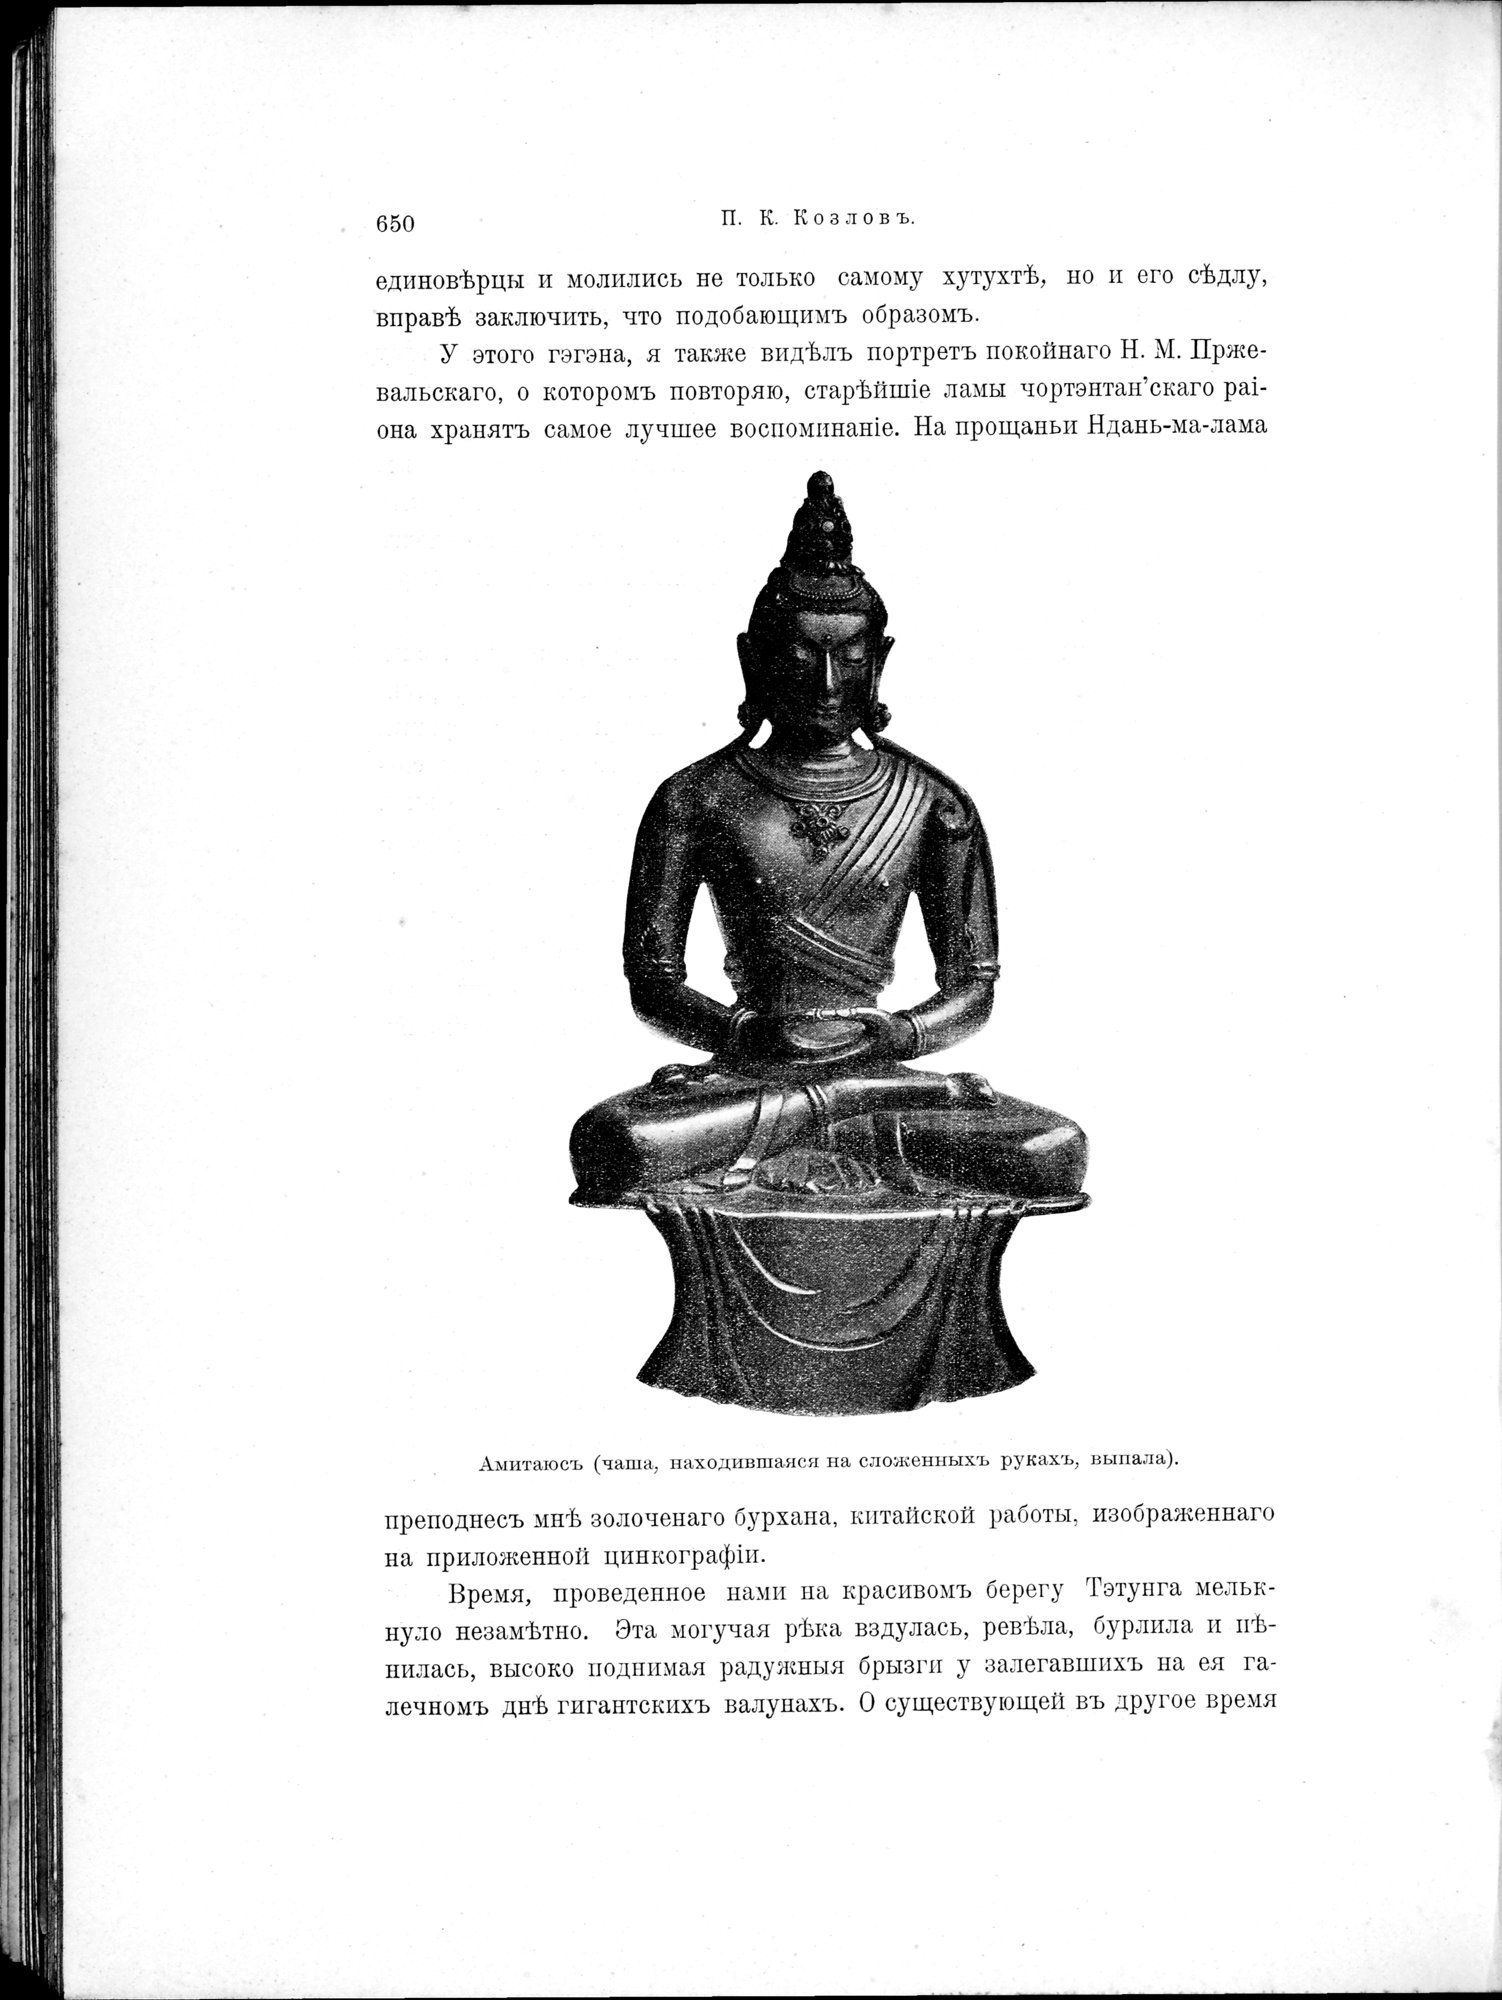 Mongoliia i Kam : vol.2 / Page 480 (Grayscale High Resolution Image)